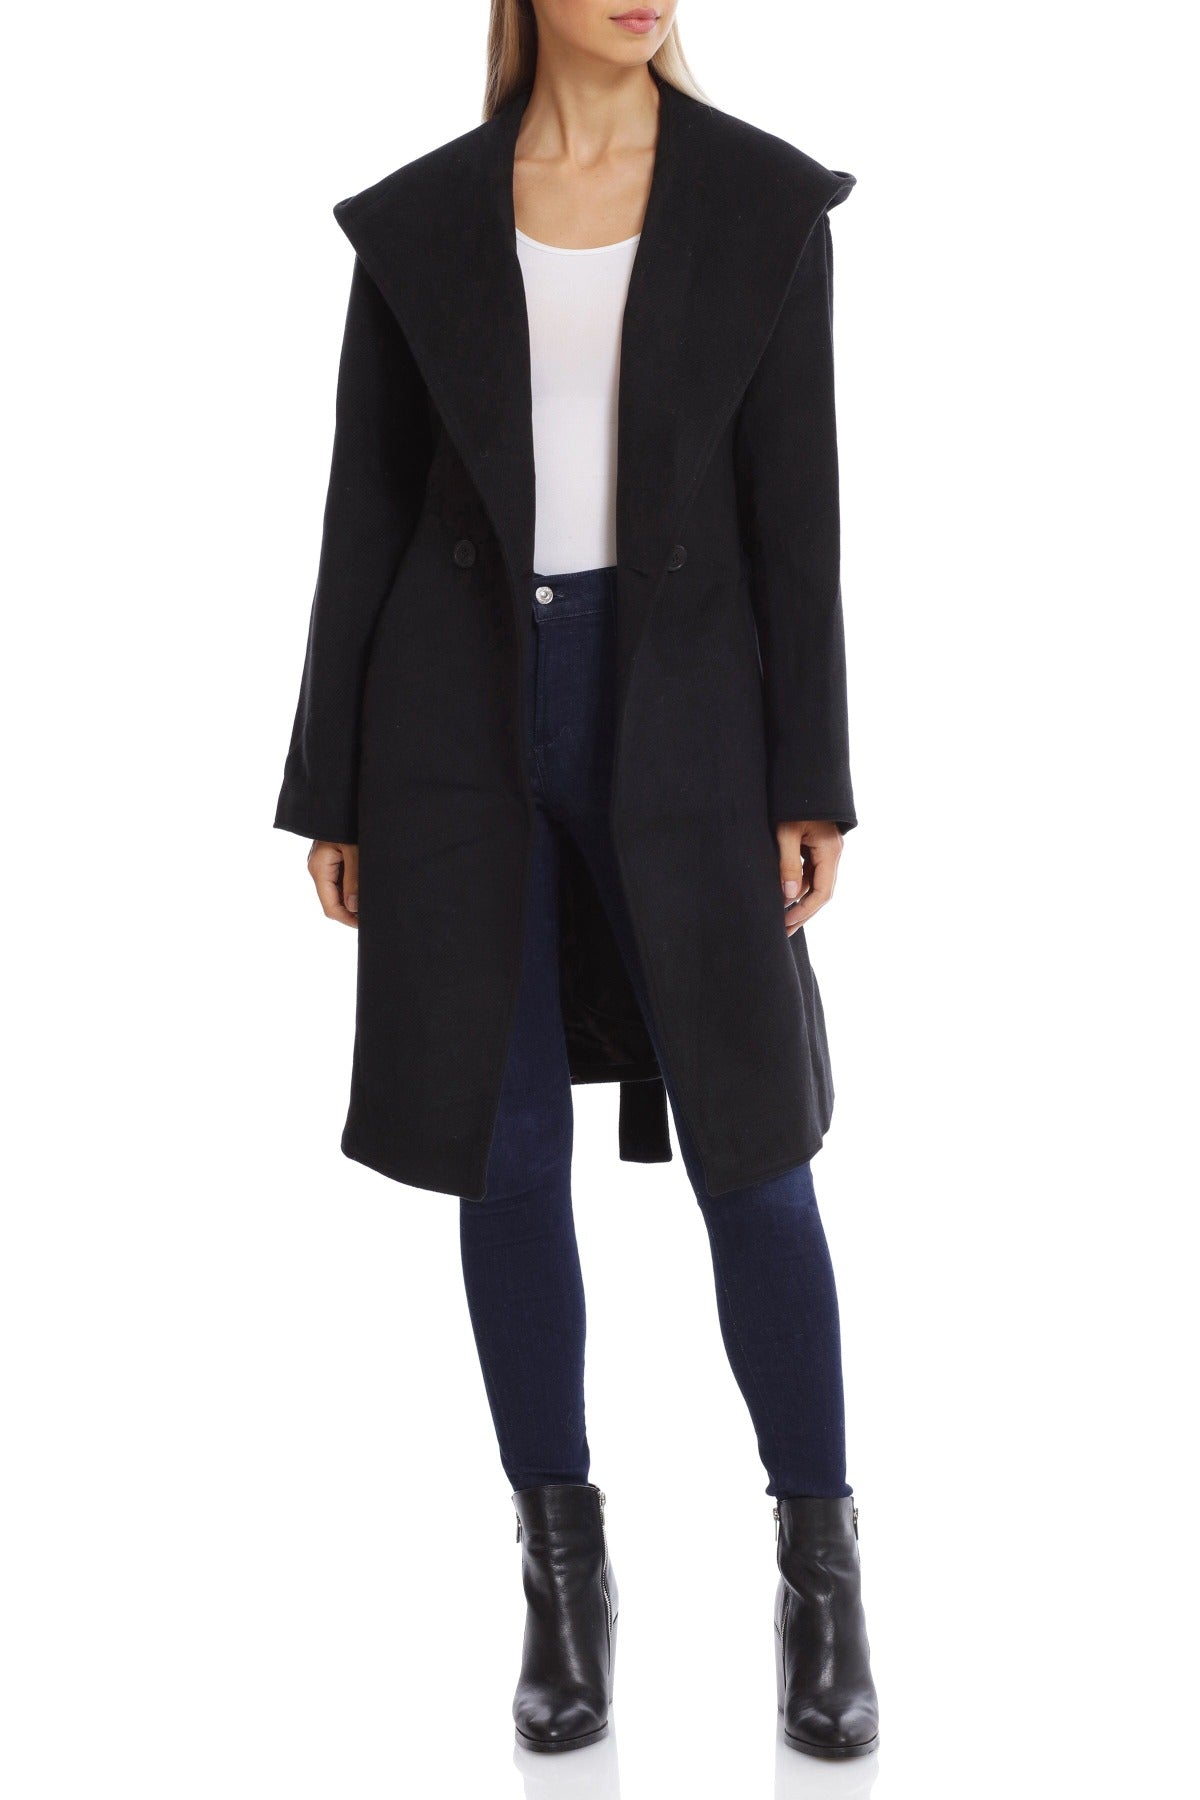 Black figure flattering hooded wool-blend belted midi coat jacket for ladies by Avec Les Filles